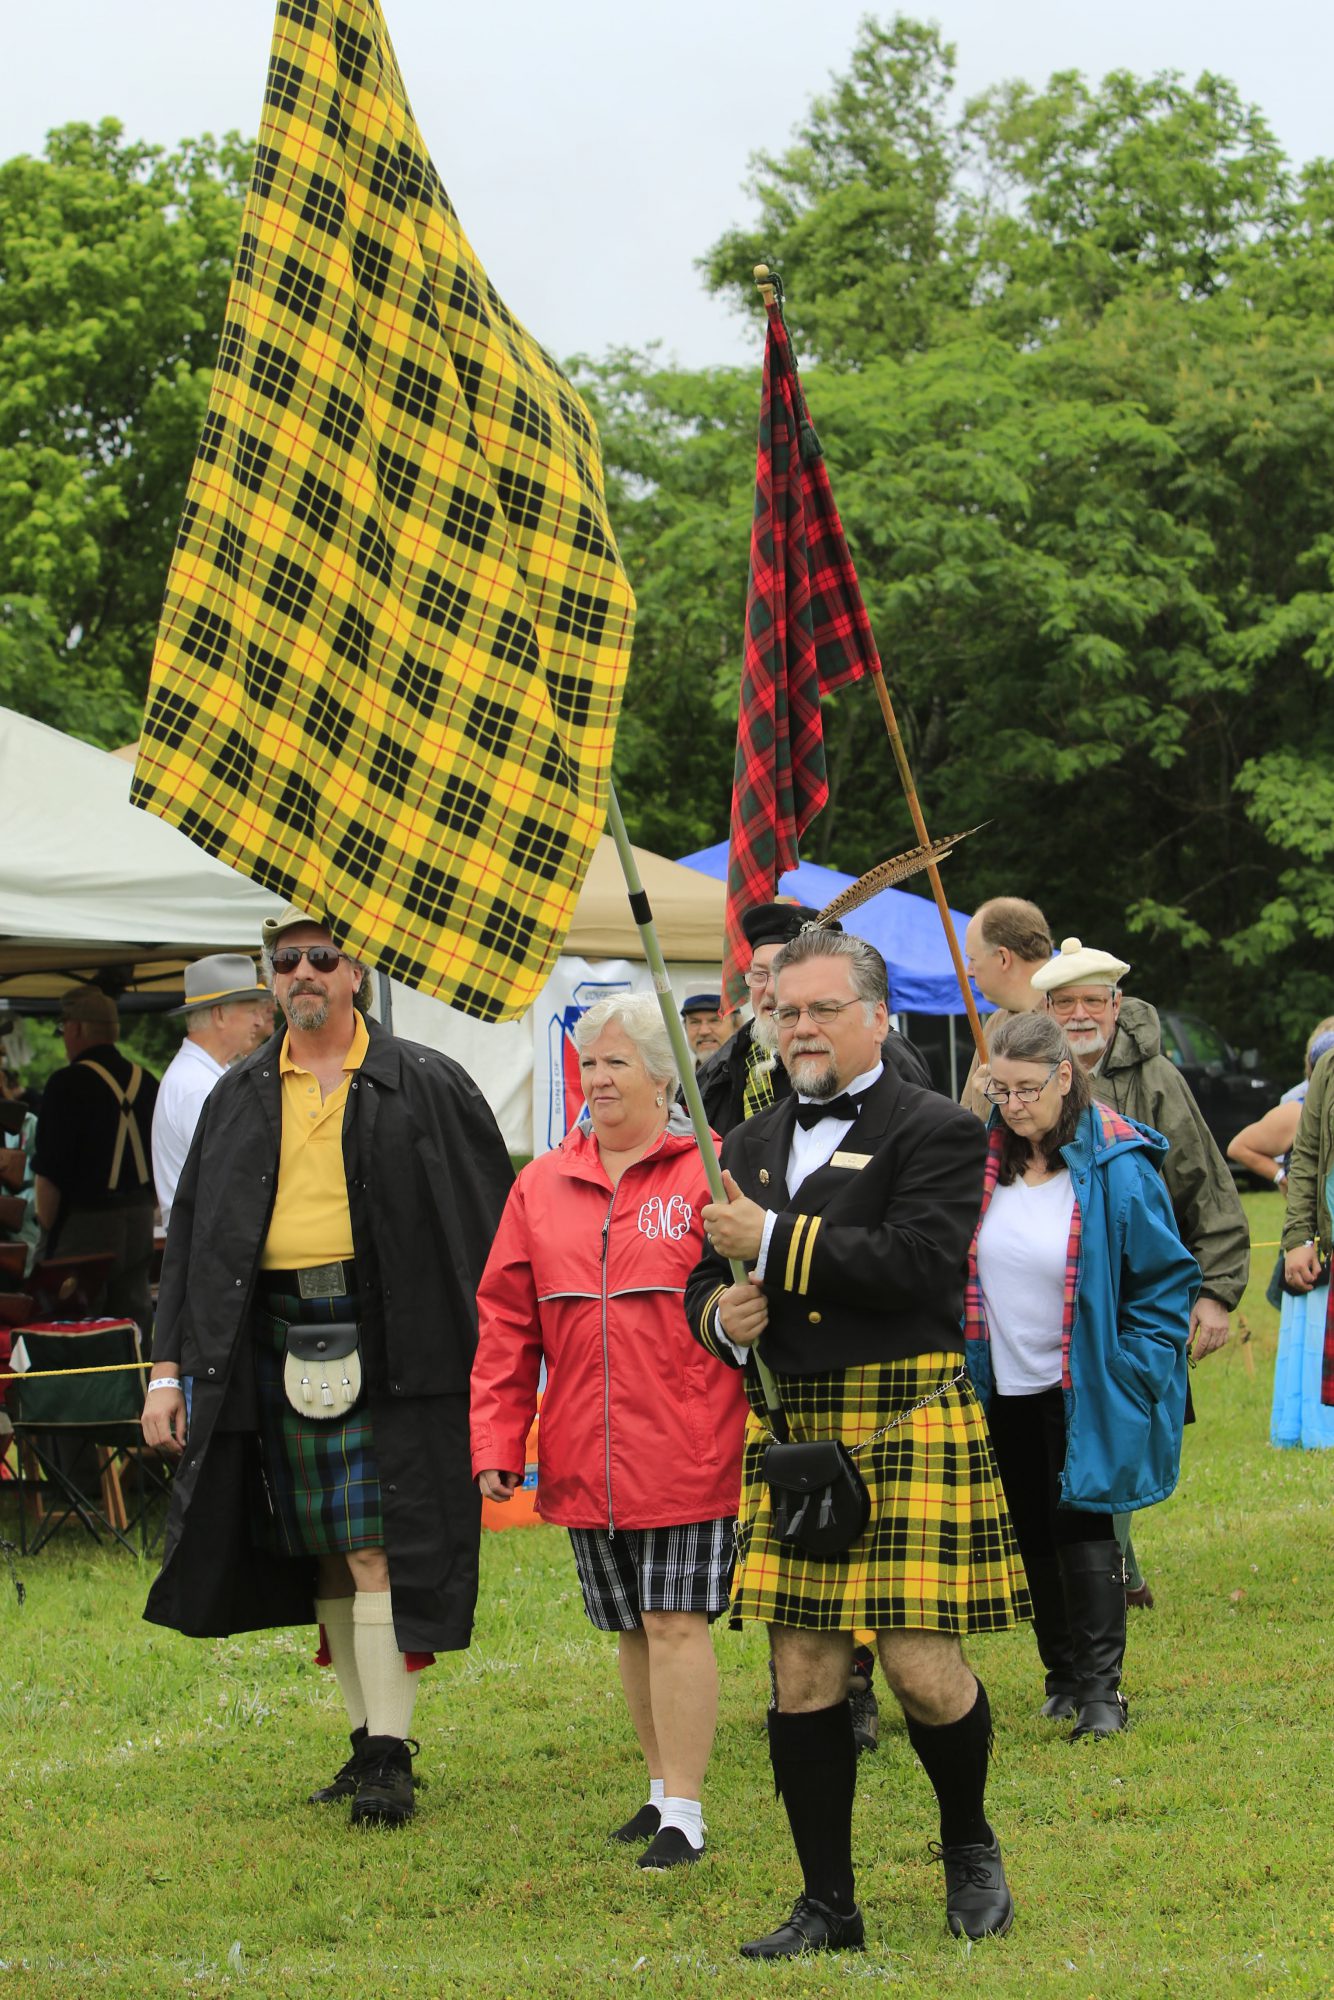 Scottish clans with their tartans